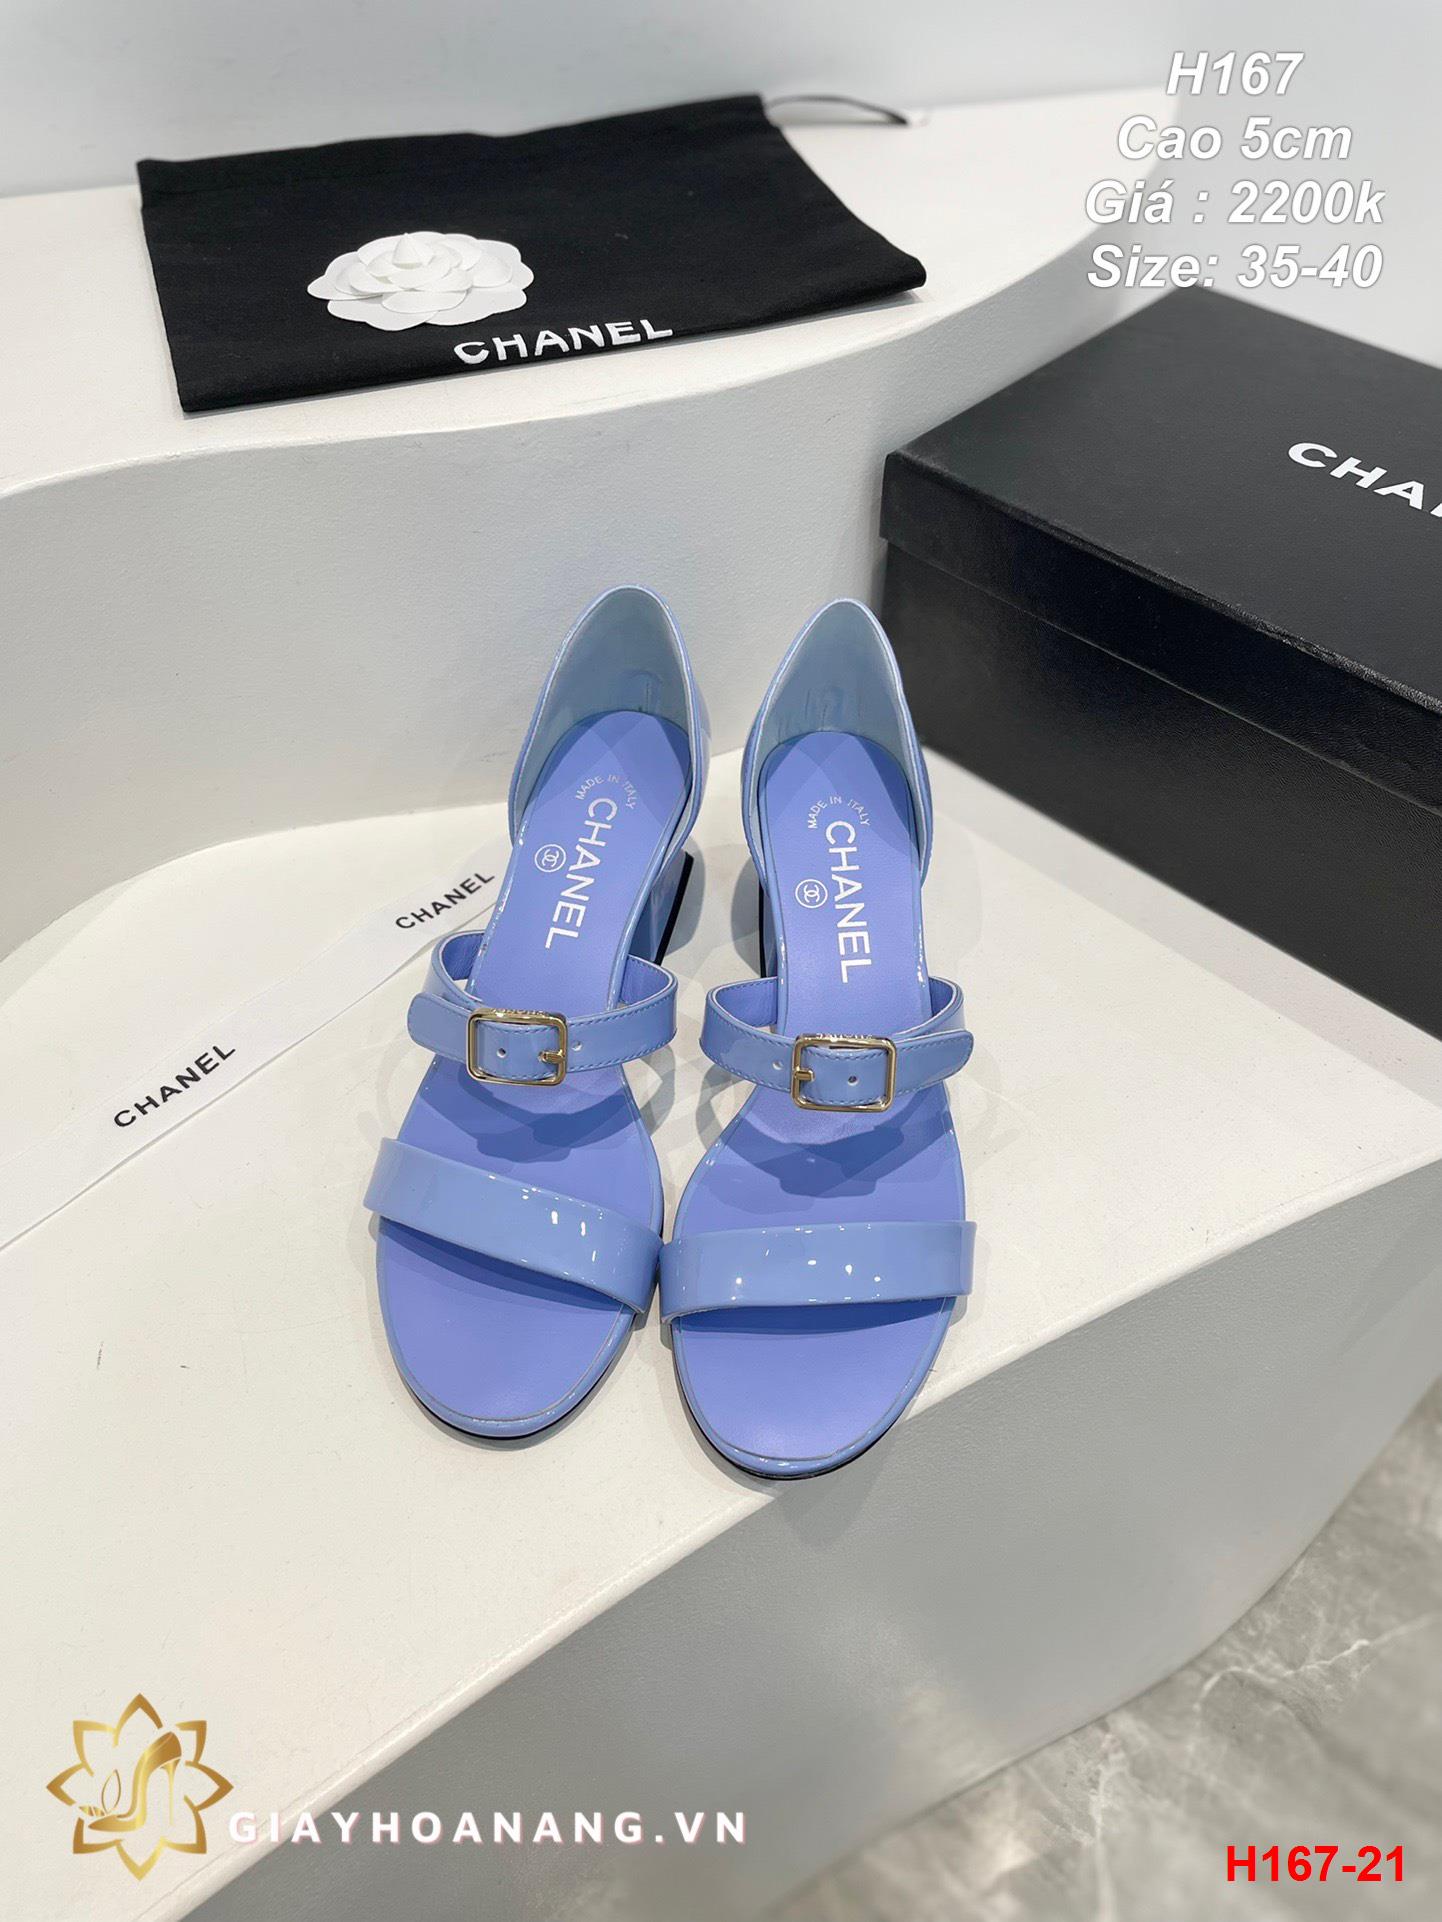 H167-21 Chanel sandal cao 5cm siêu cấp